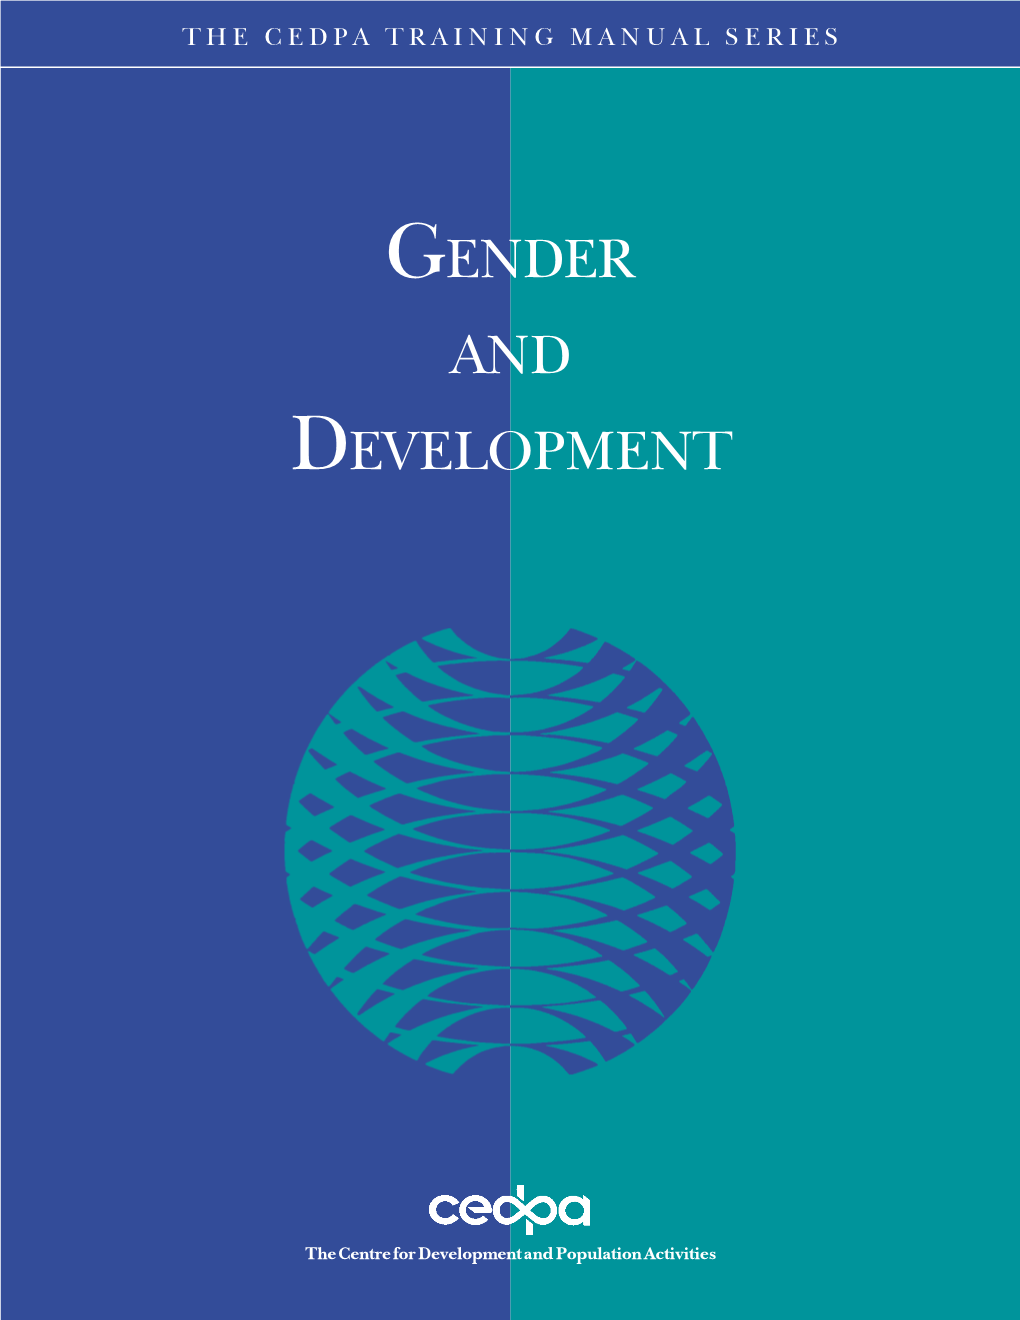 Gender and Development Manual